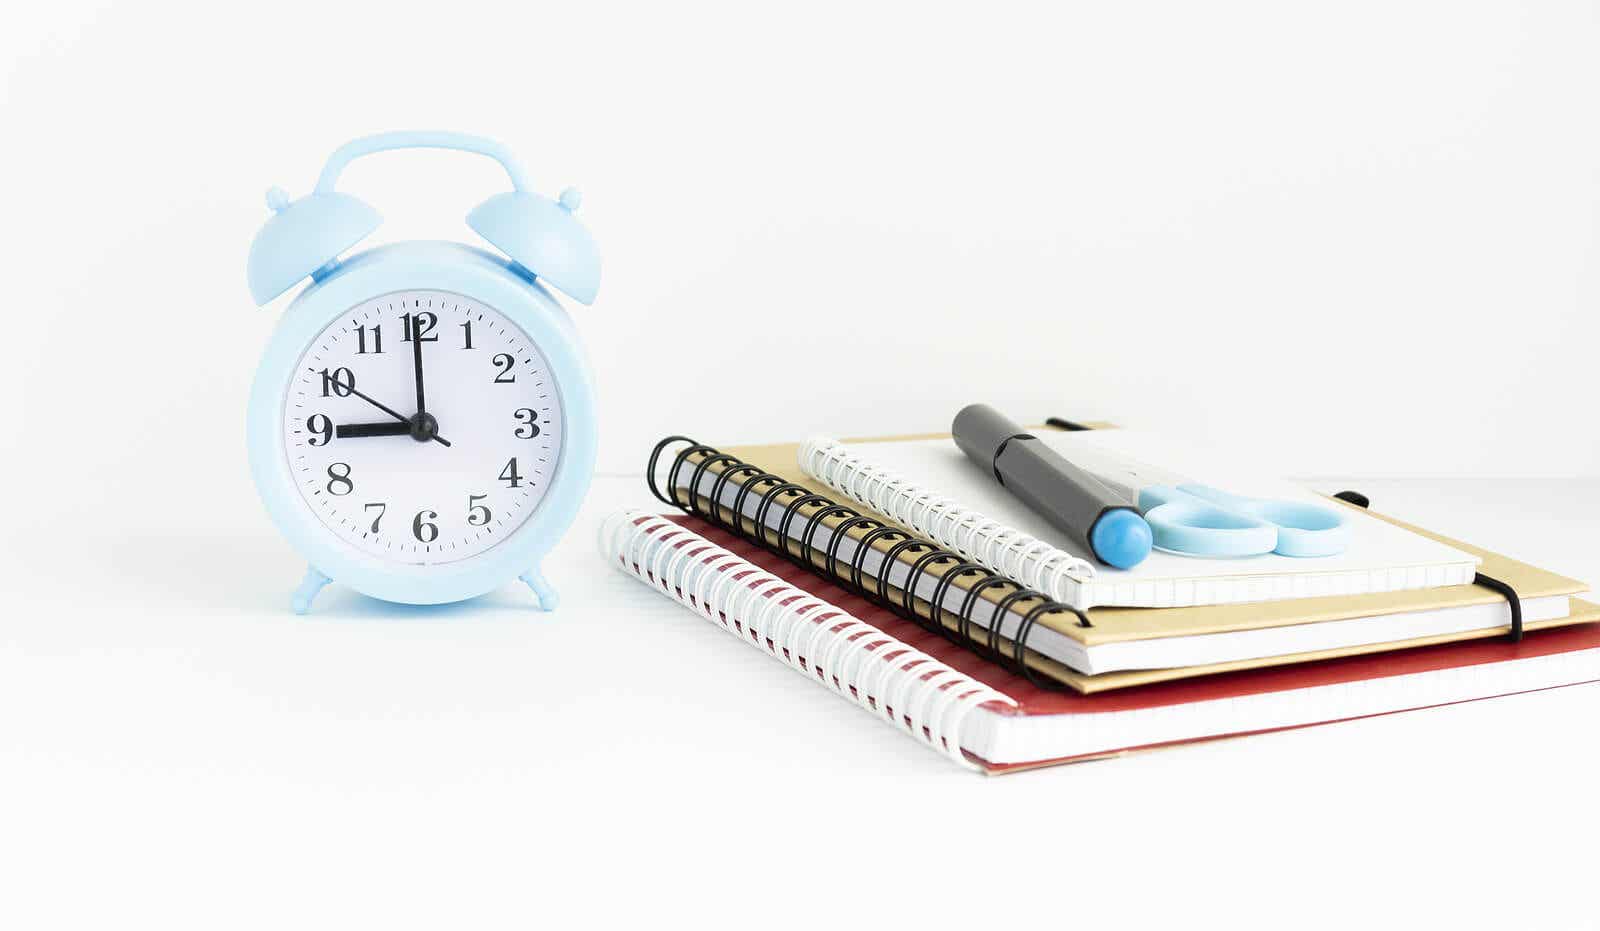 An alarm clock, notebooks, a pen, and scissors.